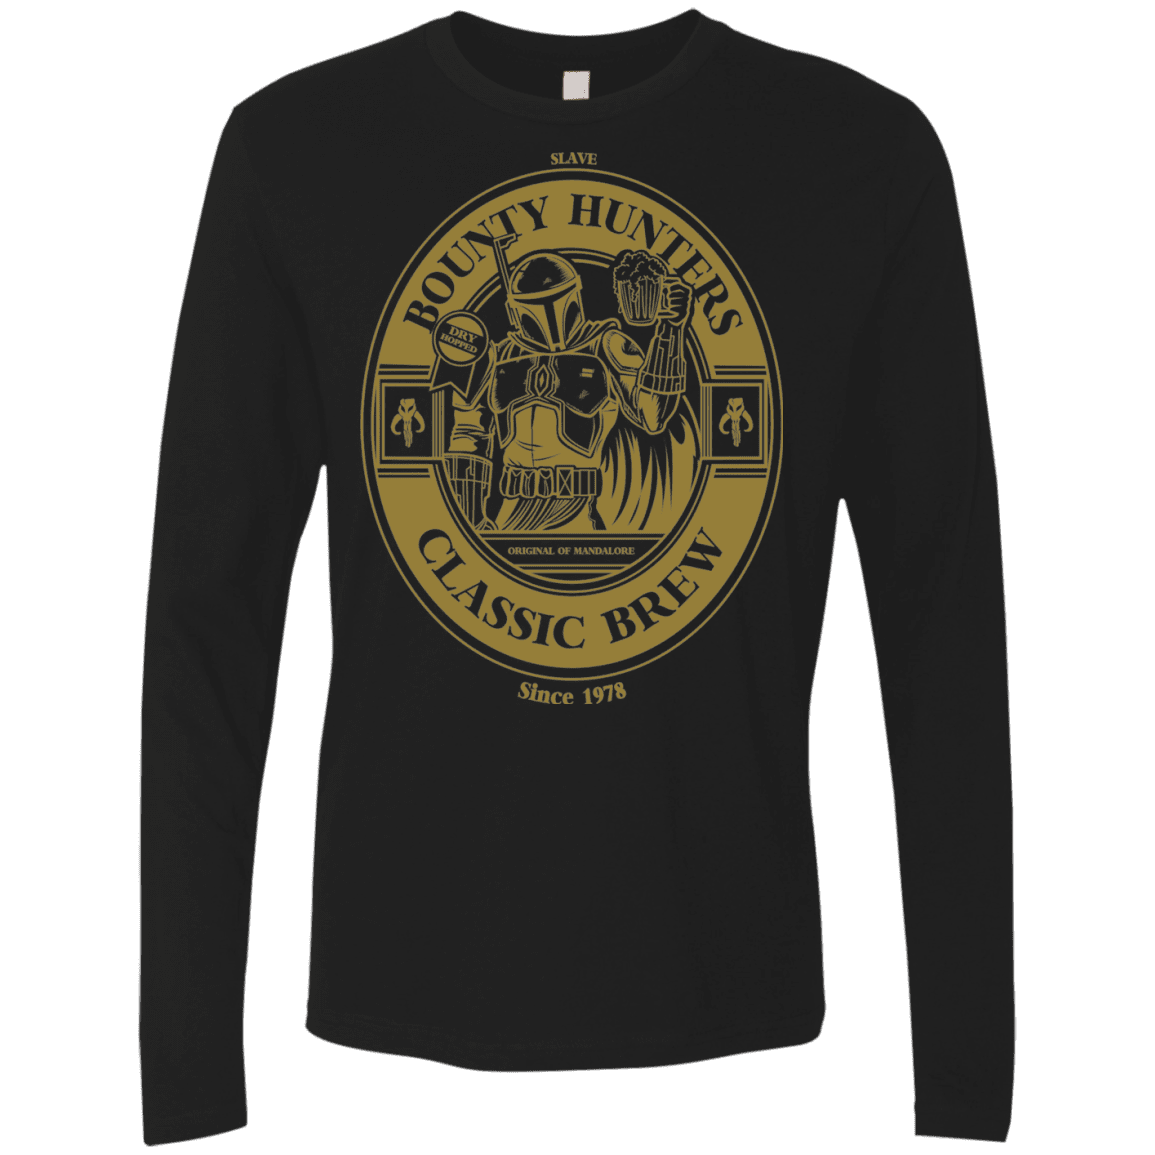 T-Shirts Black / S Bounty Hunters Classic Brew Men's Premium Long Sleeve